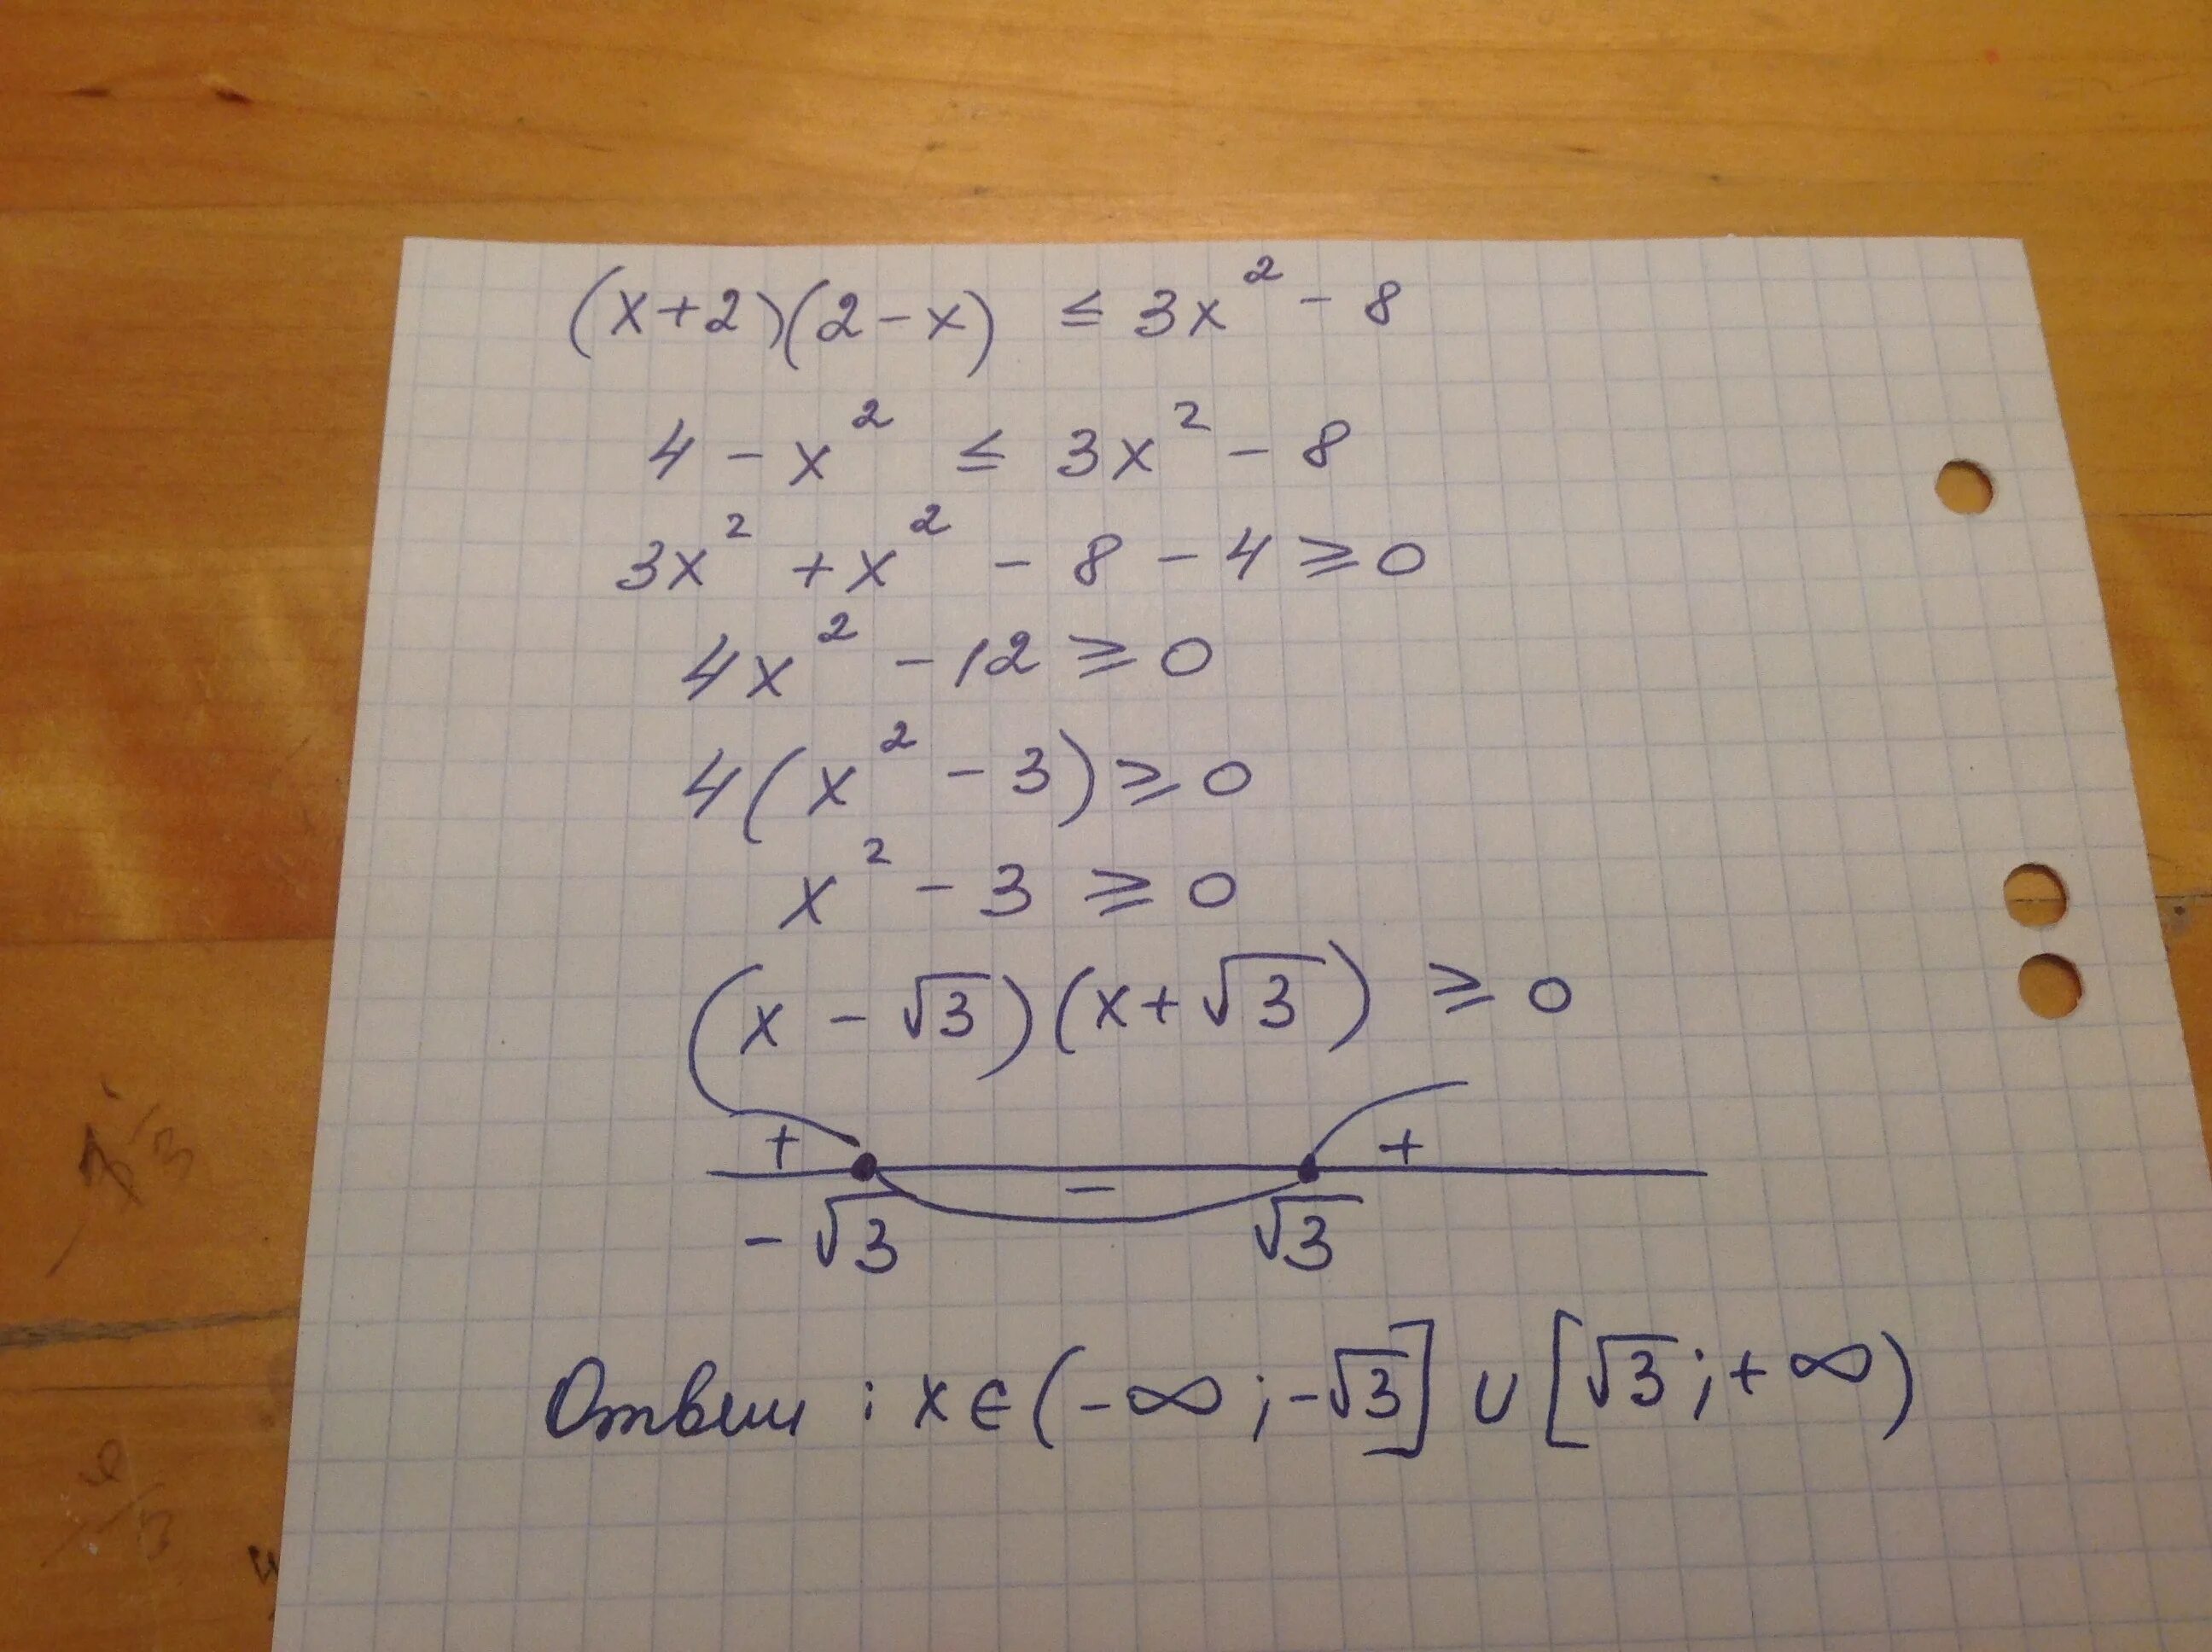 3x 4 2x 1 7 укажите. X2-3x+2 меньше или равно 0. X^2+2x-3 меньше равно 0. 3x-x2 меньше или равно 0. X (3-X) (2+X) меньше или равно 0.